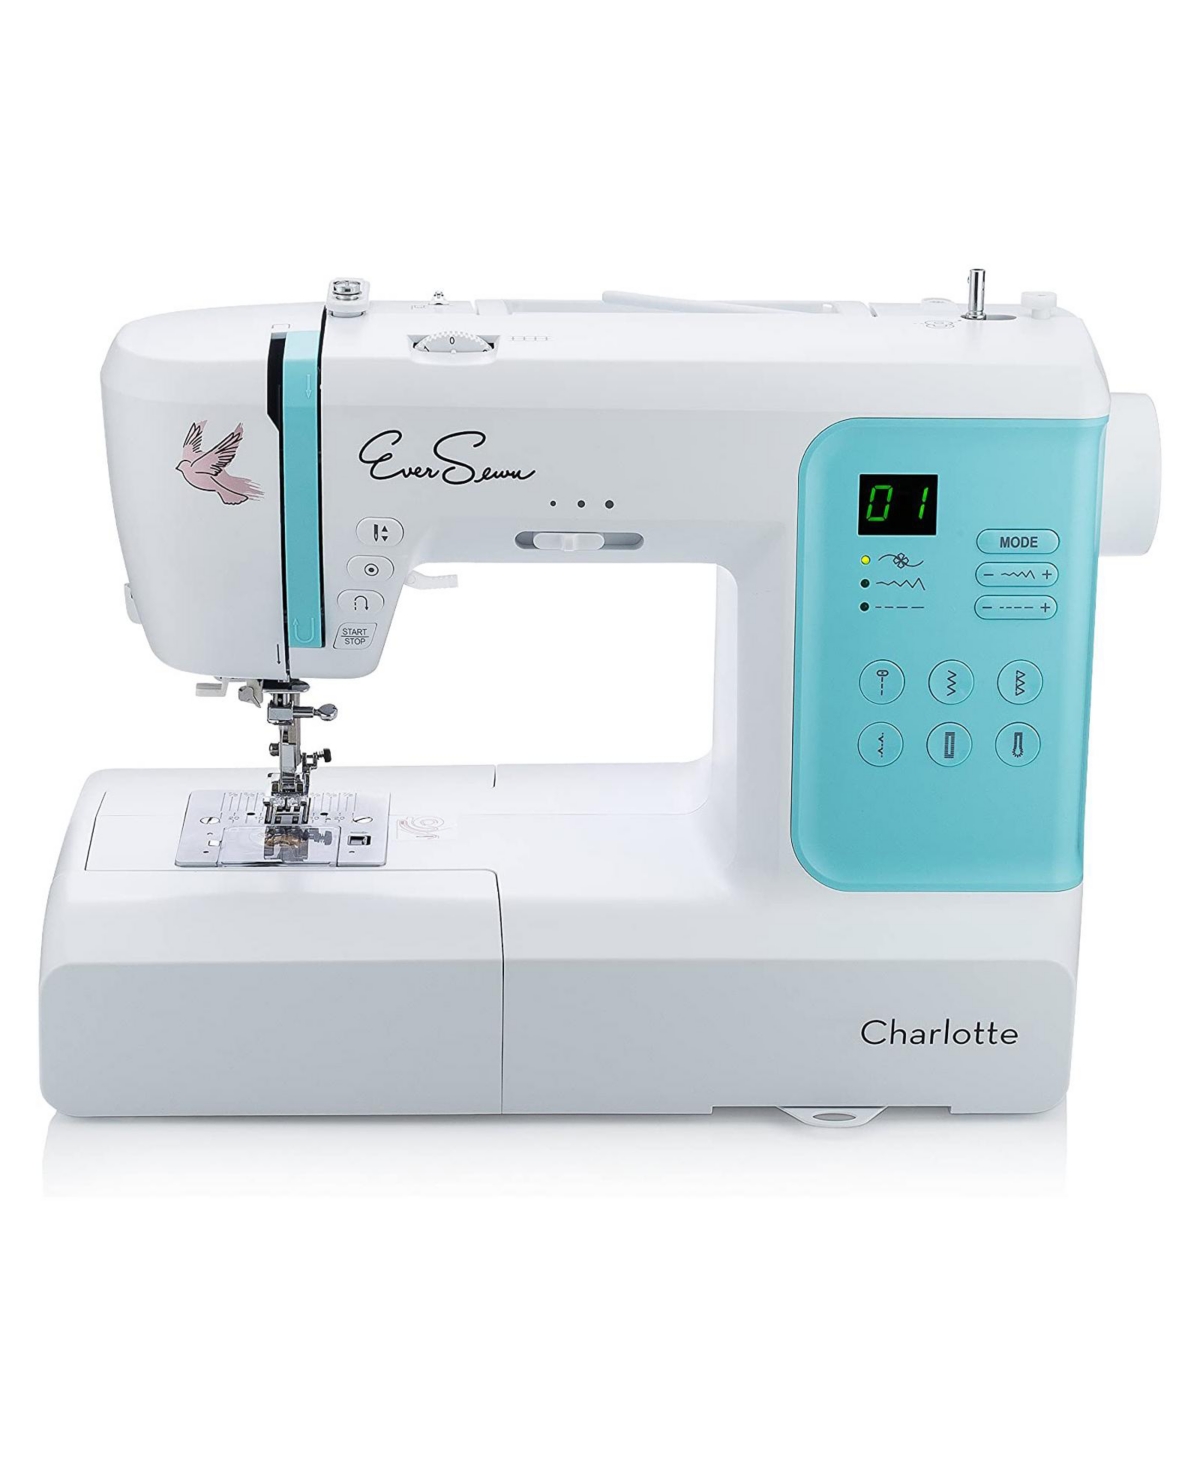 Charlotte Computerized Sewing Machine - White